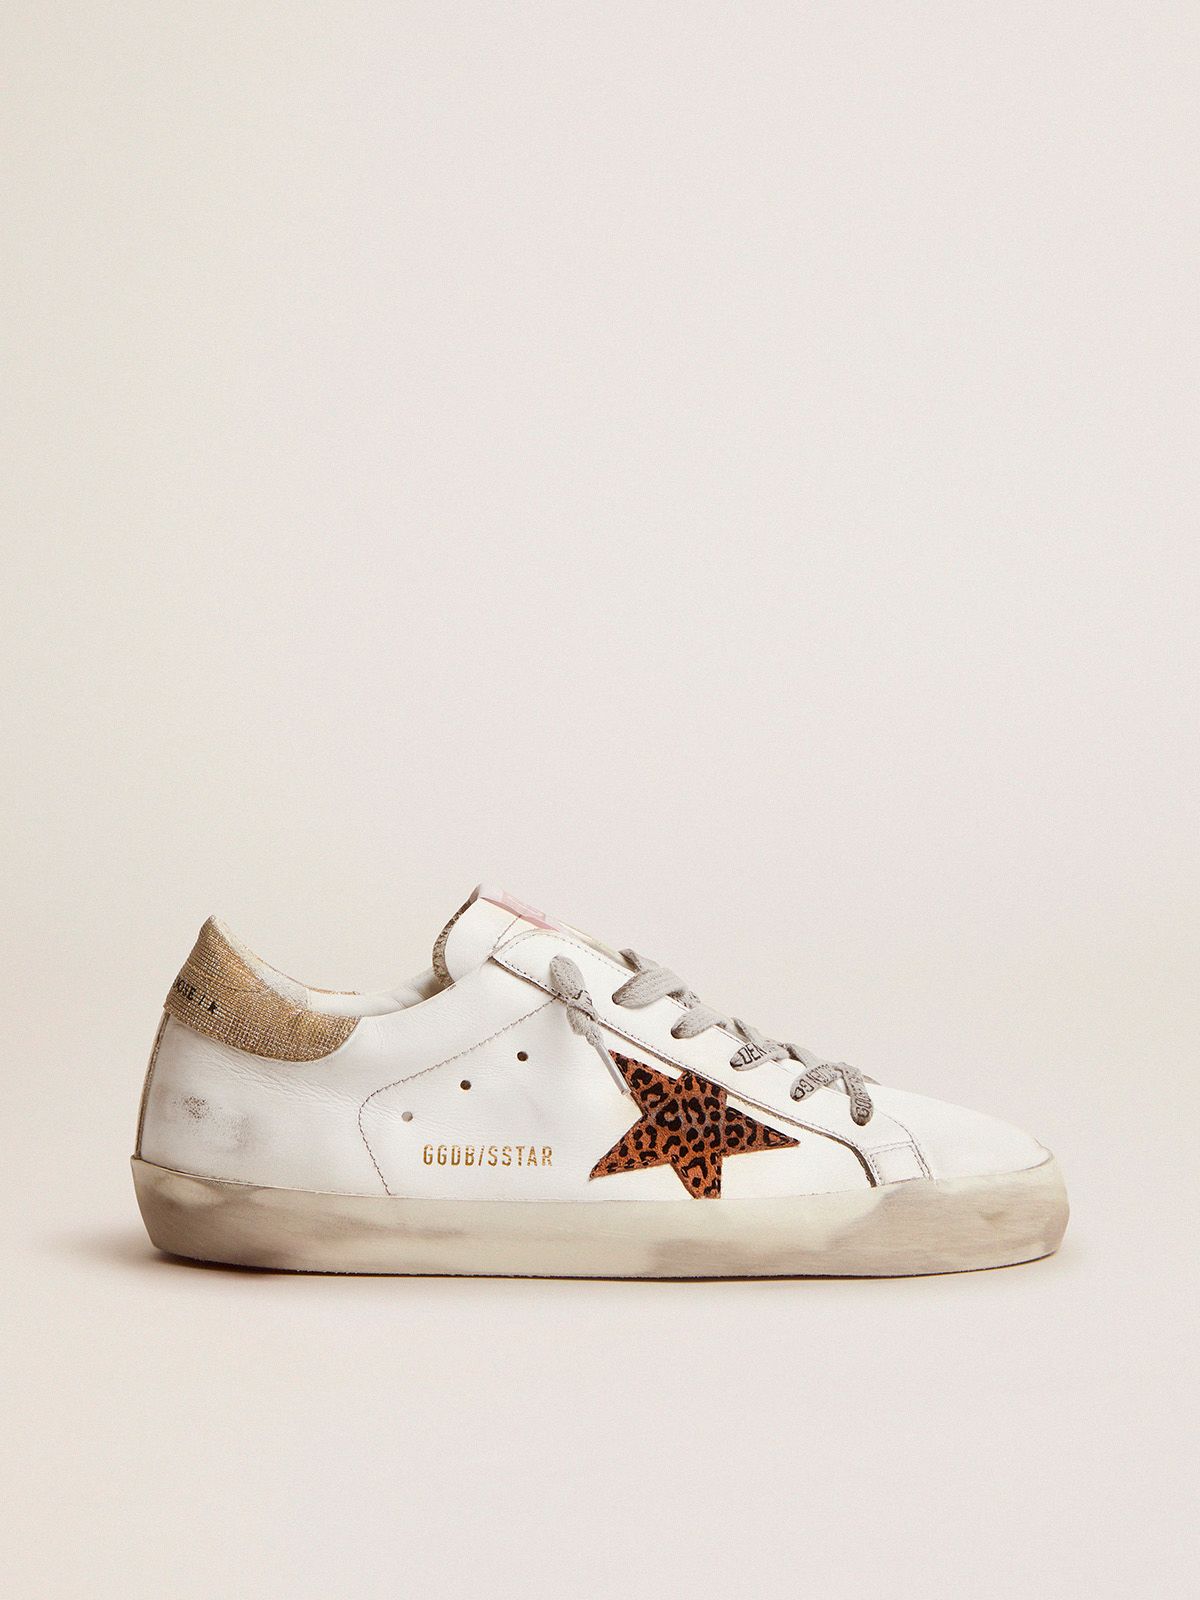 LTD sneakers with leopard-print star gold glitter heel | Golden Goose